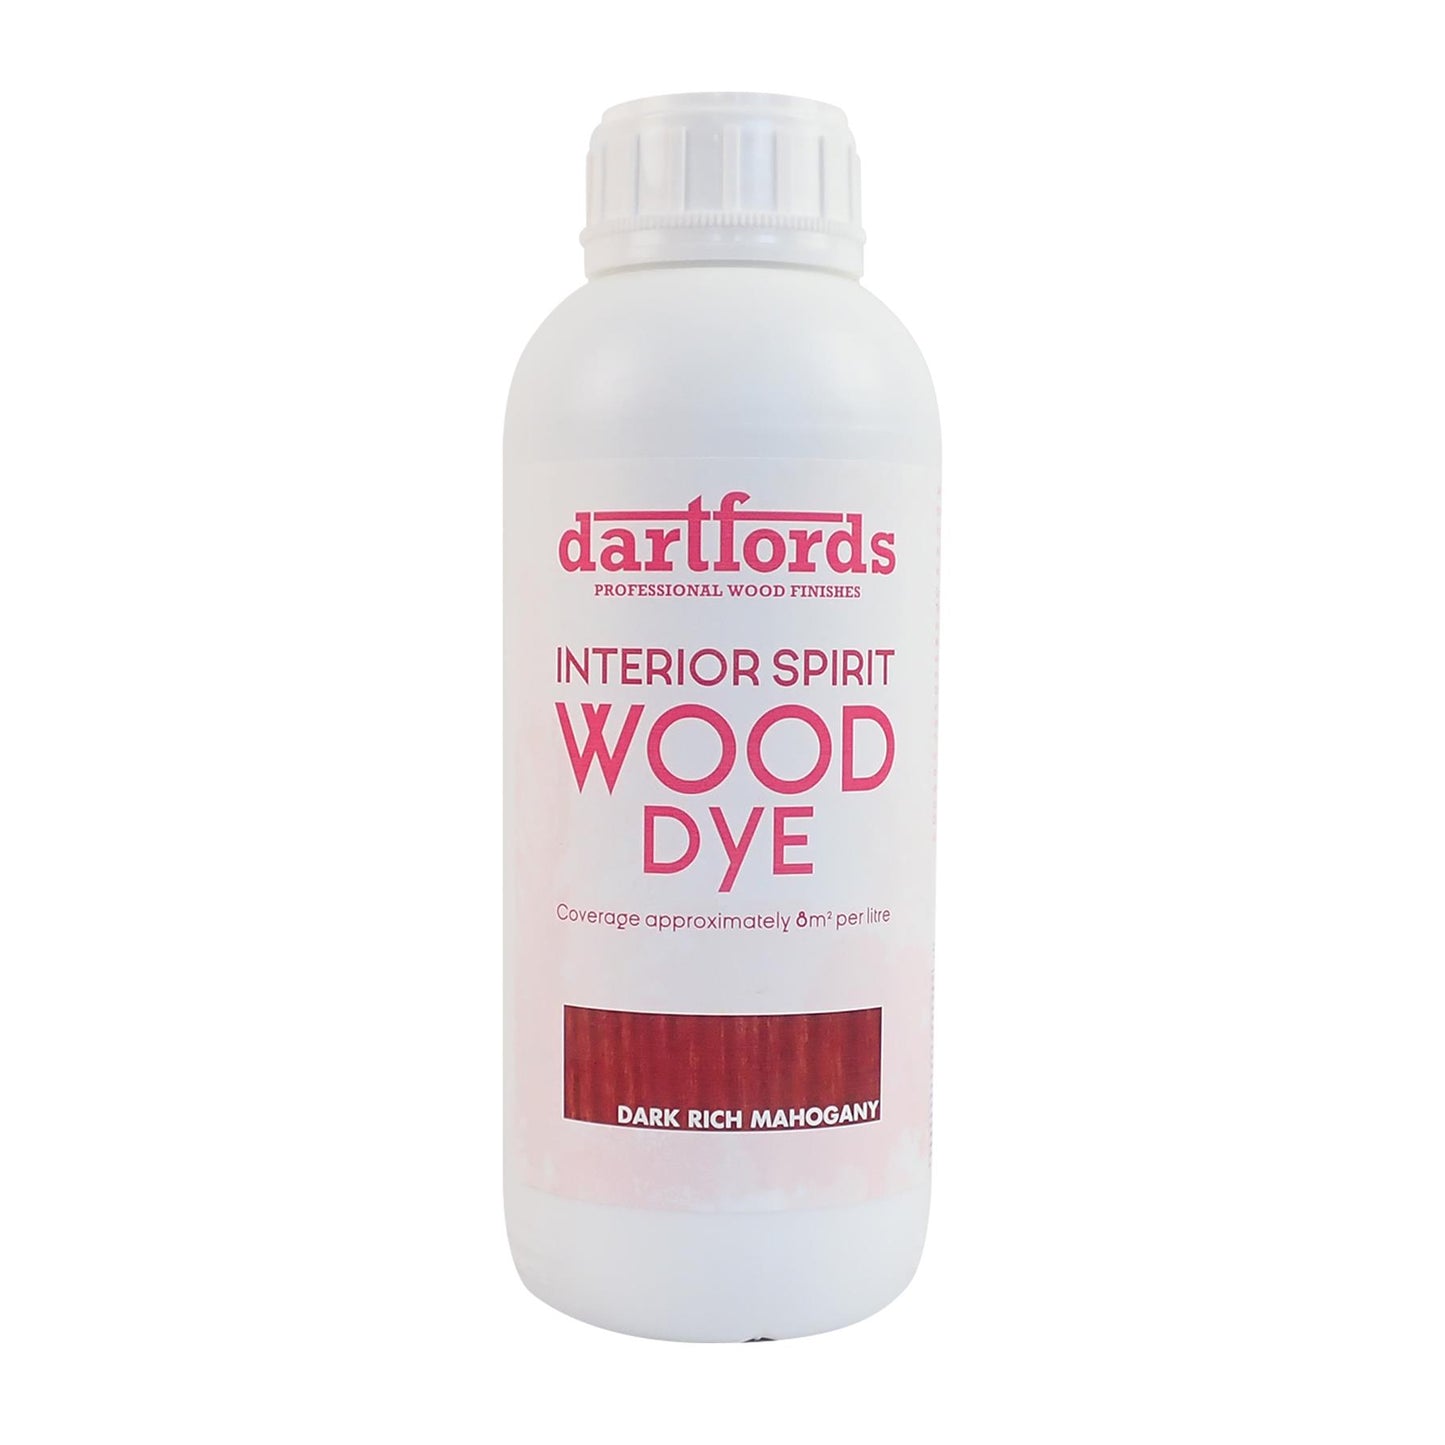 dartfords Dark Rich Mahogany Interior Spirit Based Wood Dye - 1 litre Tin